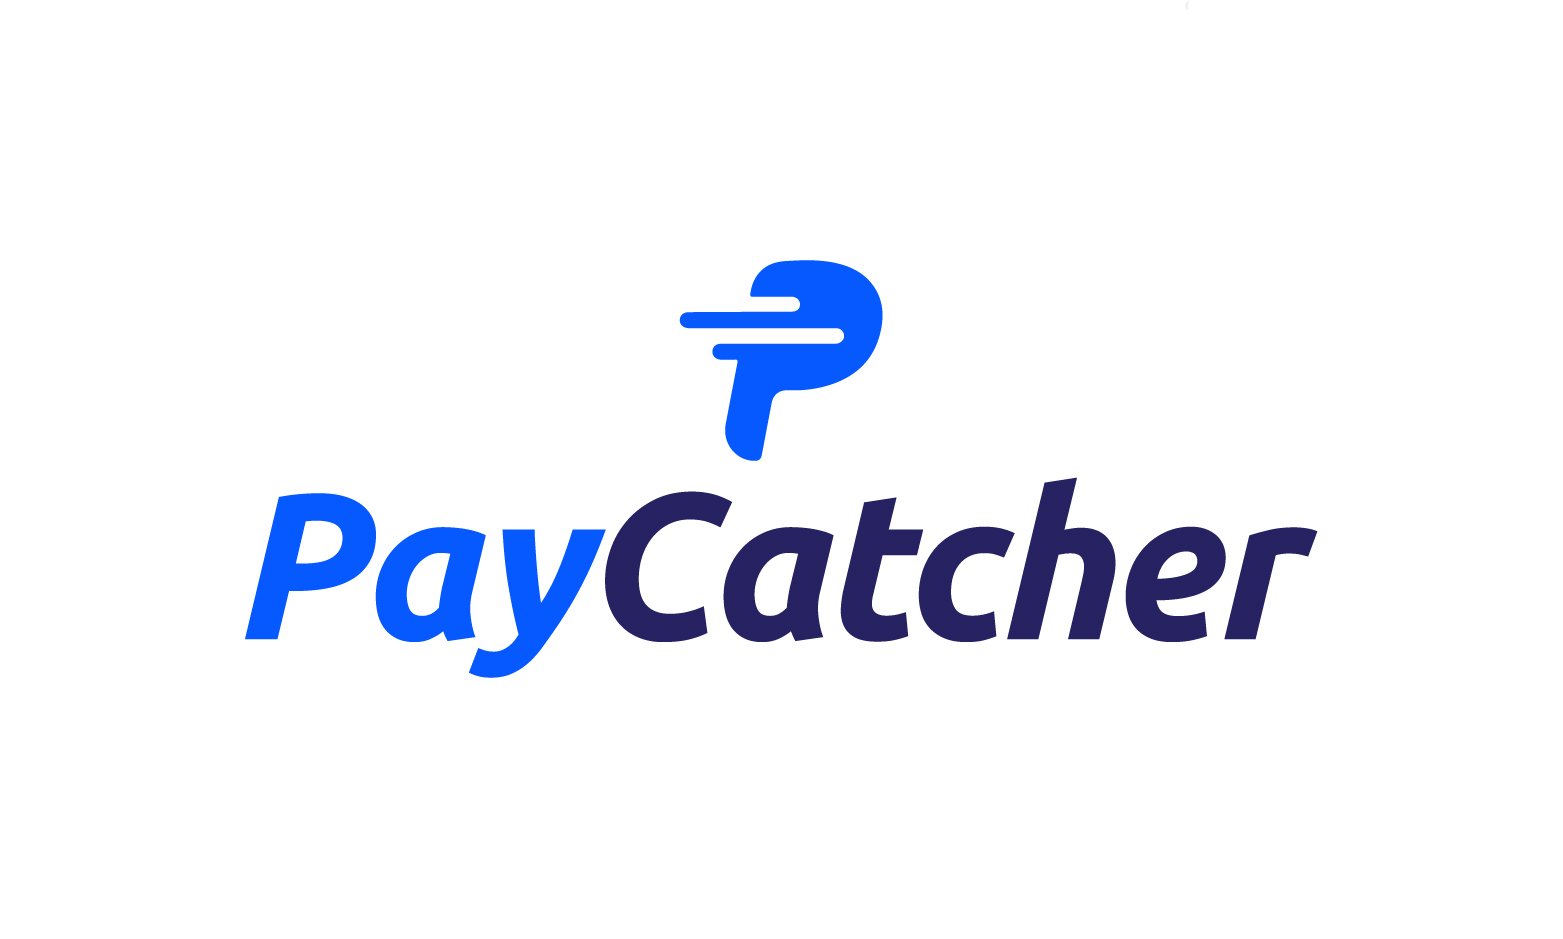 PayCatcher.com - Creative brandable domain for sale